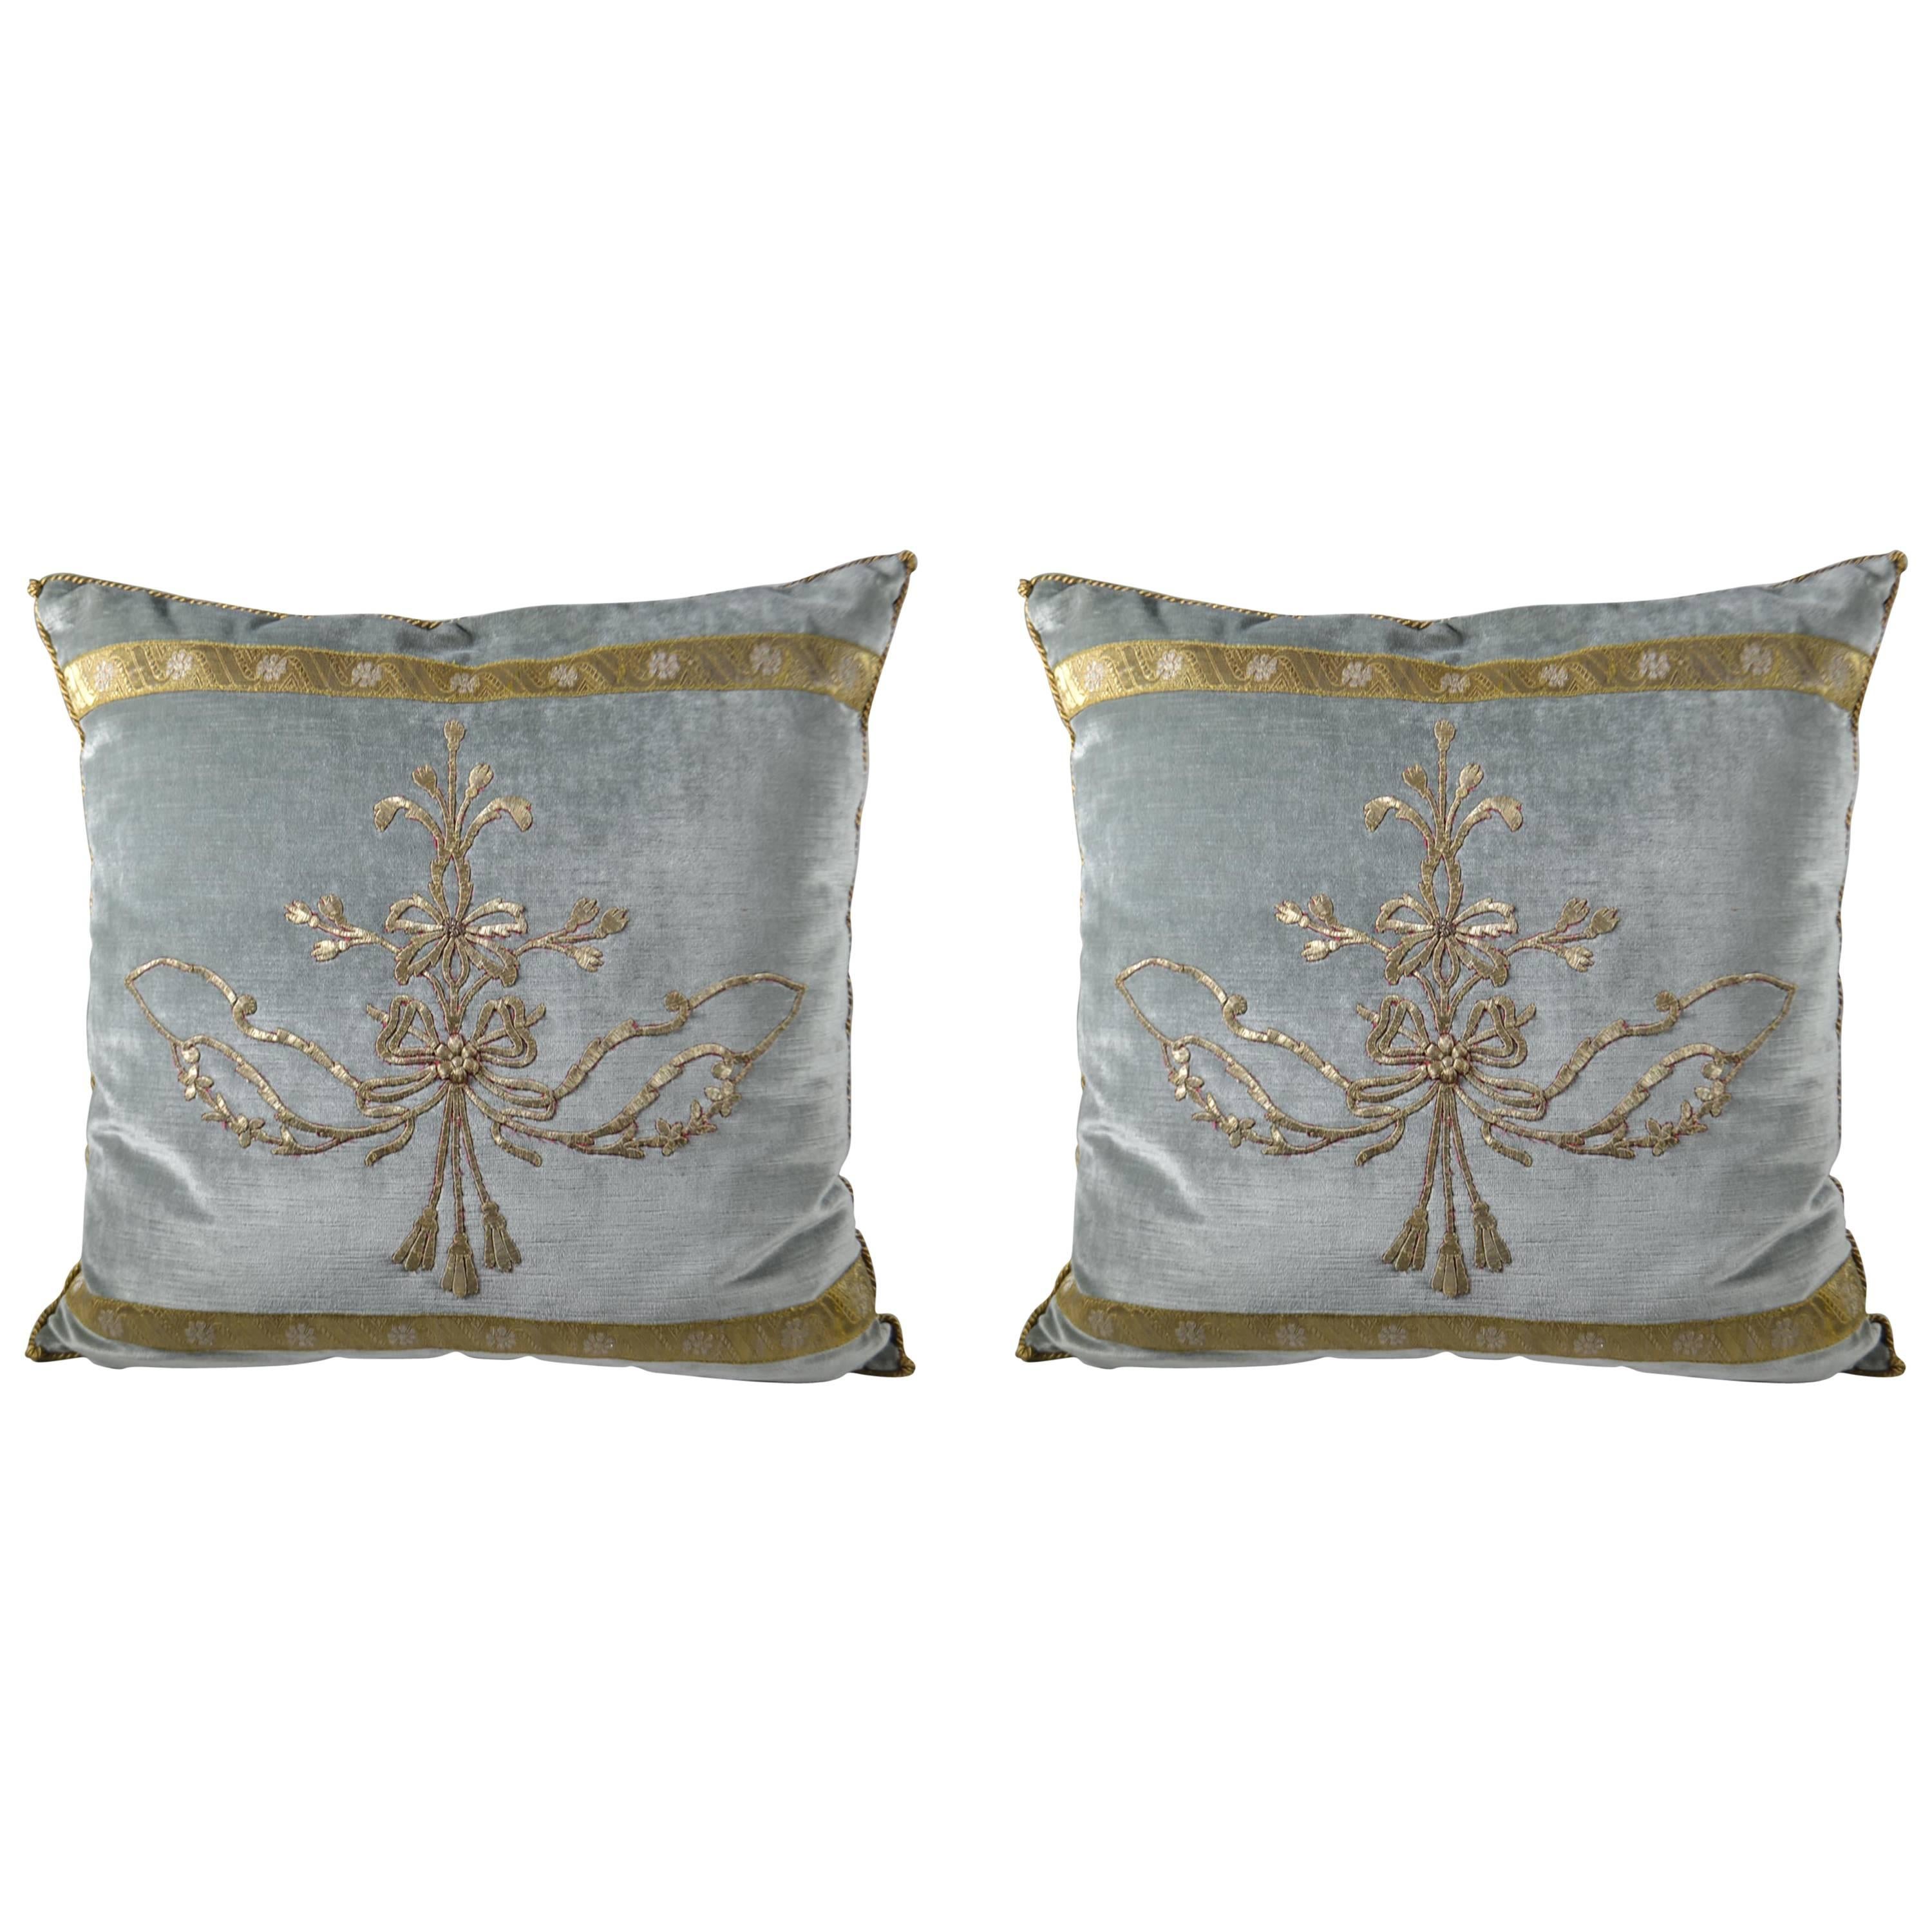 Pair of Antique Ottoman Empire Metallic Trimmed Pillows